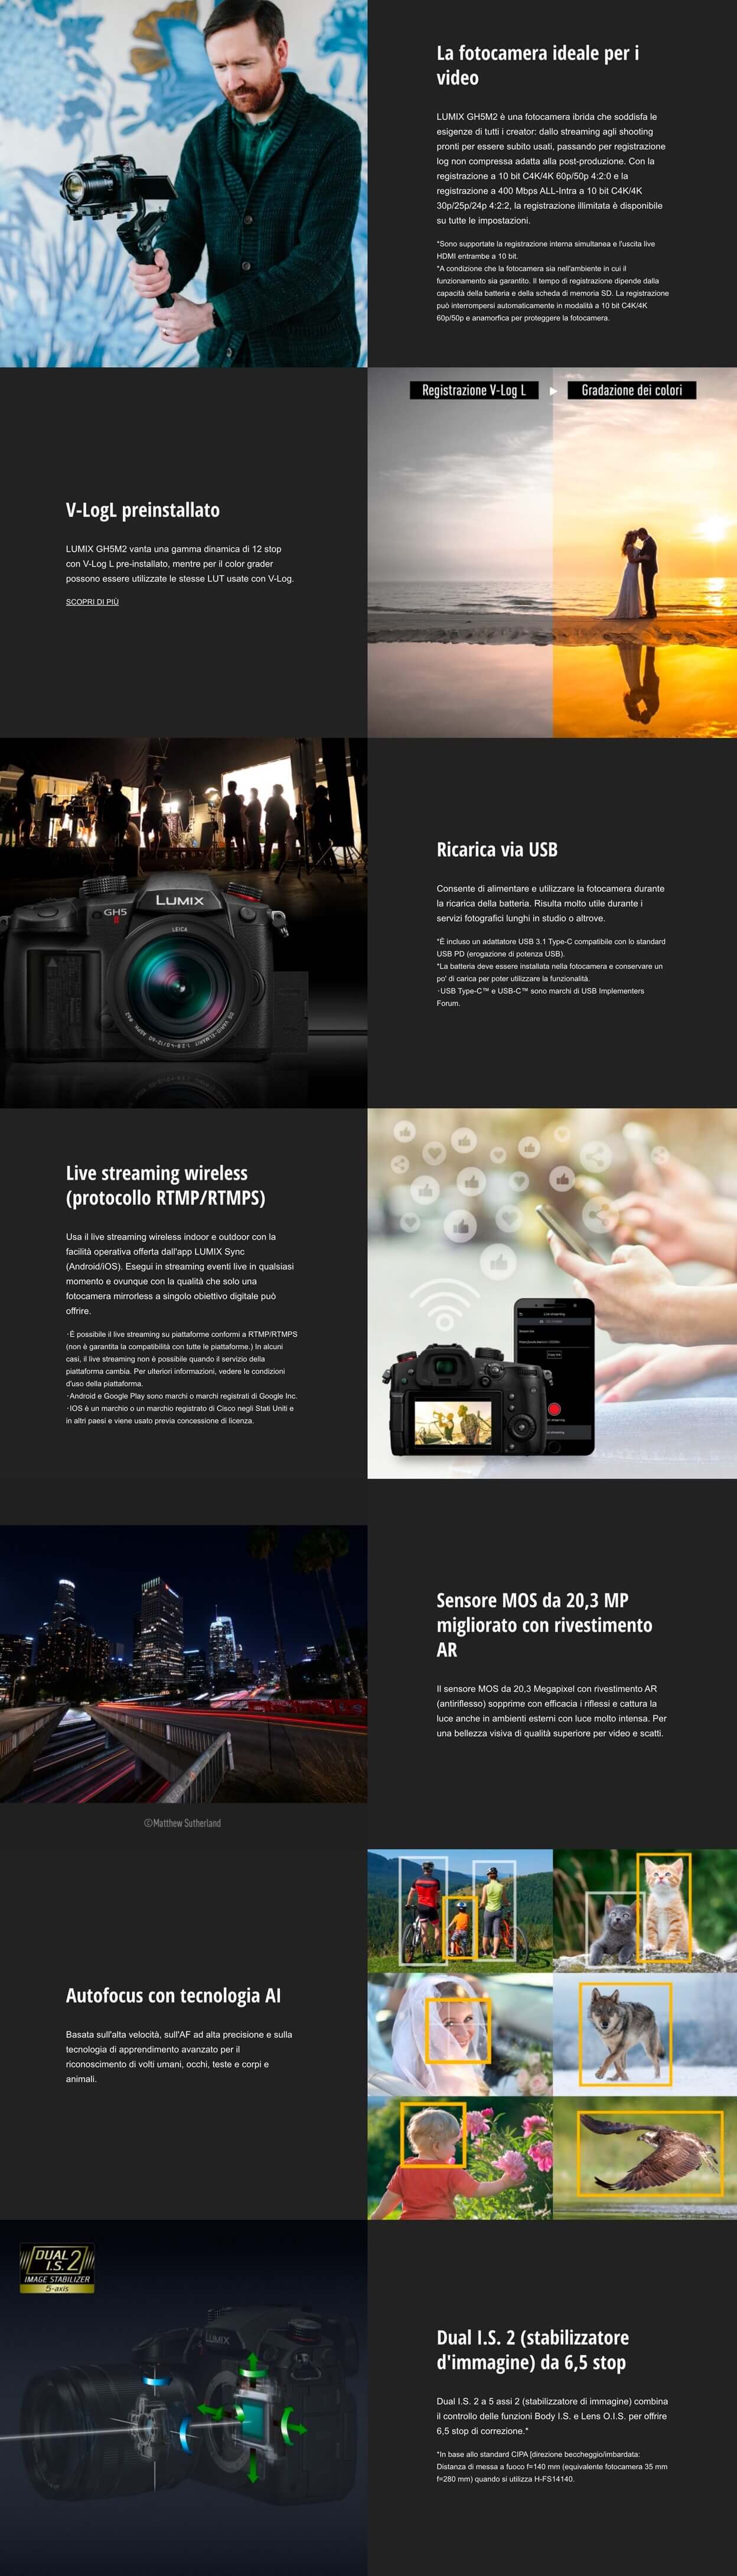 Template Panasonic Lumix GH5 M2 + Leica DG Vario-Elmarit 12-60mm f/2.8-4 Power O.I.S.